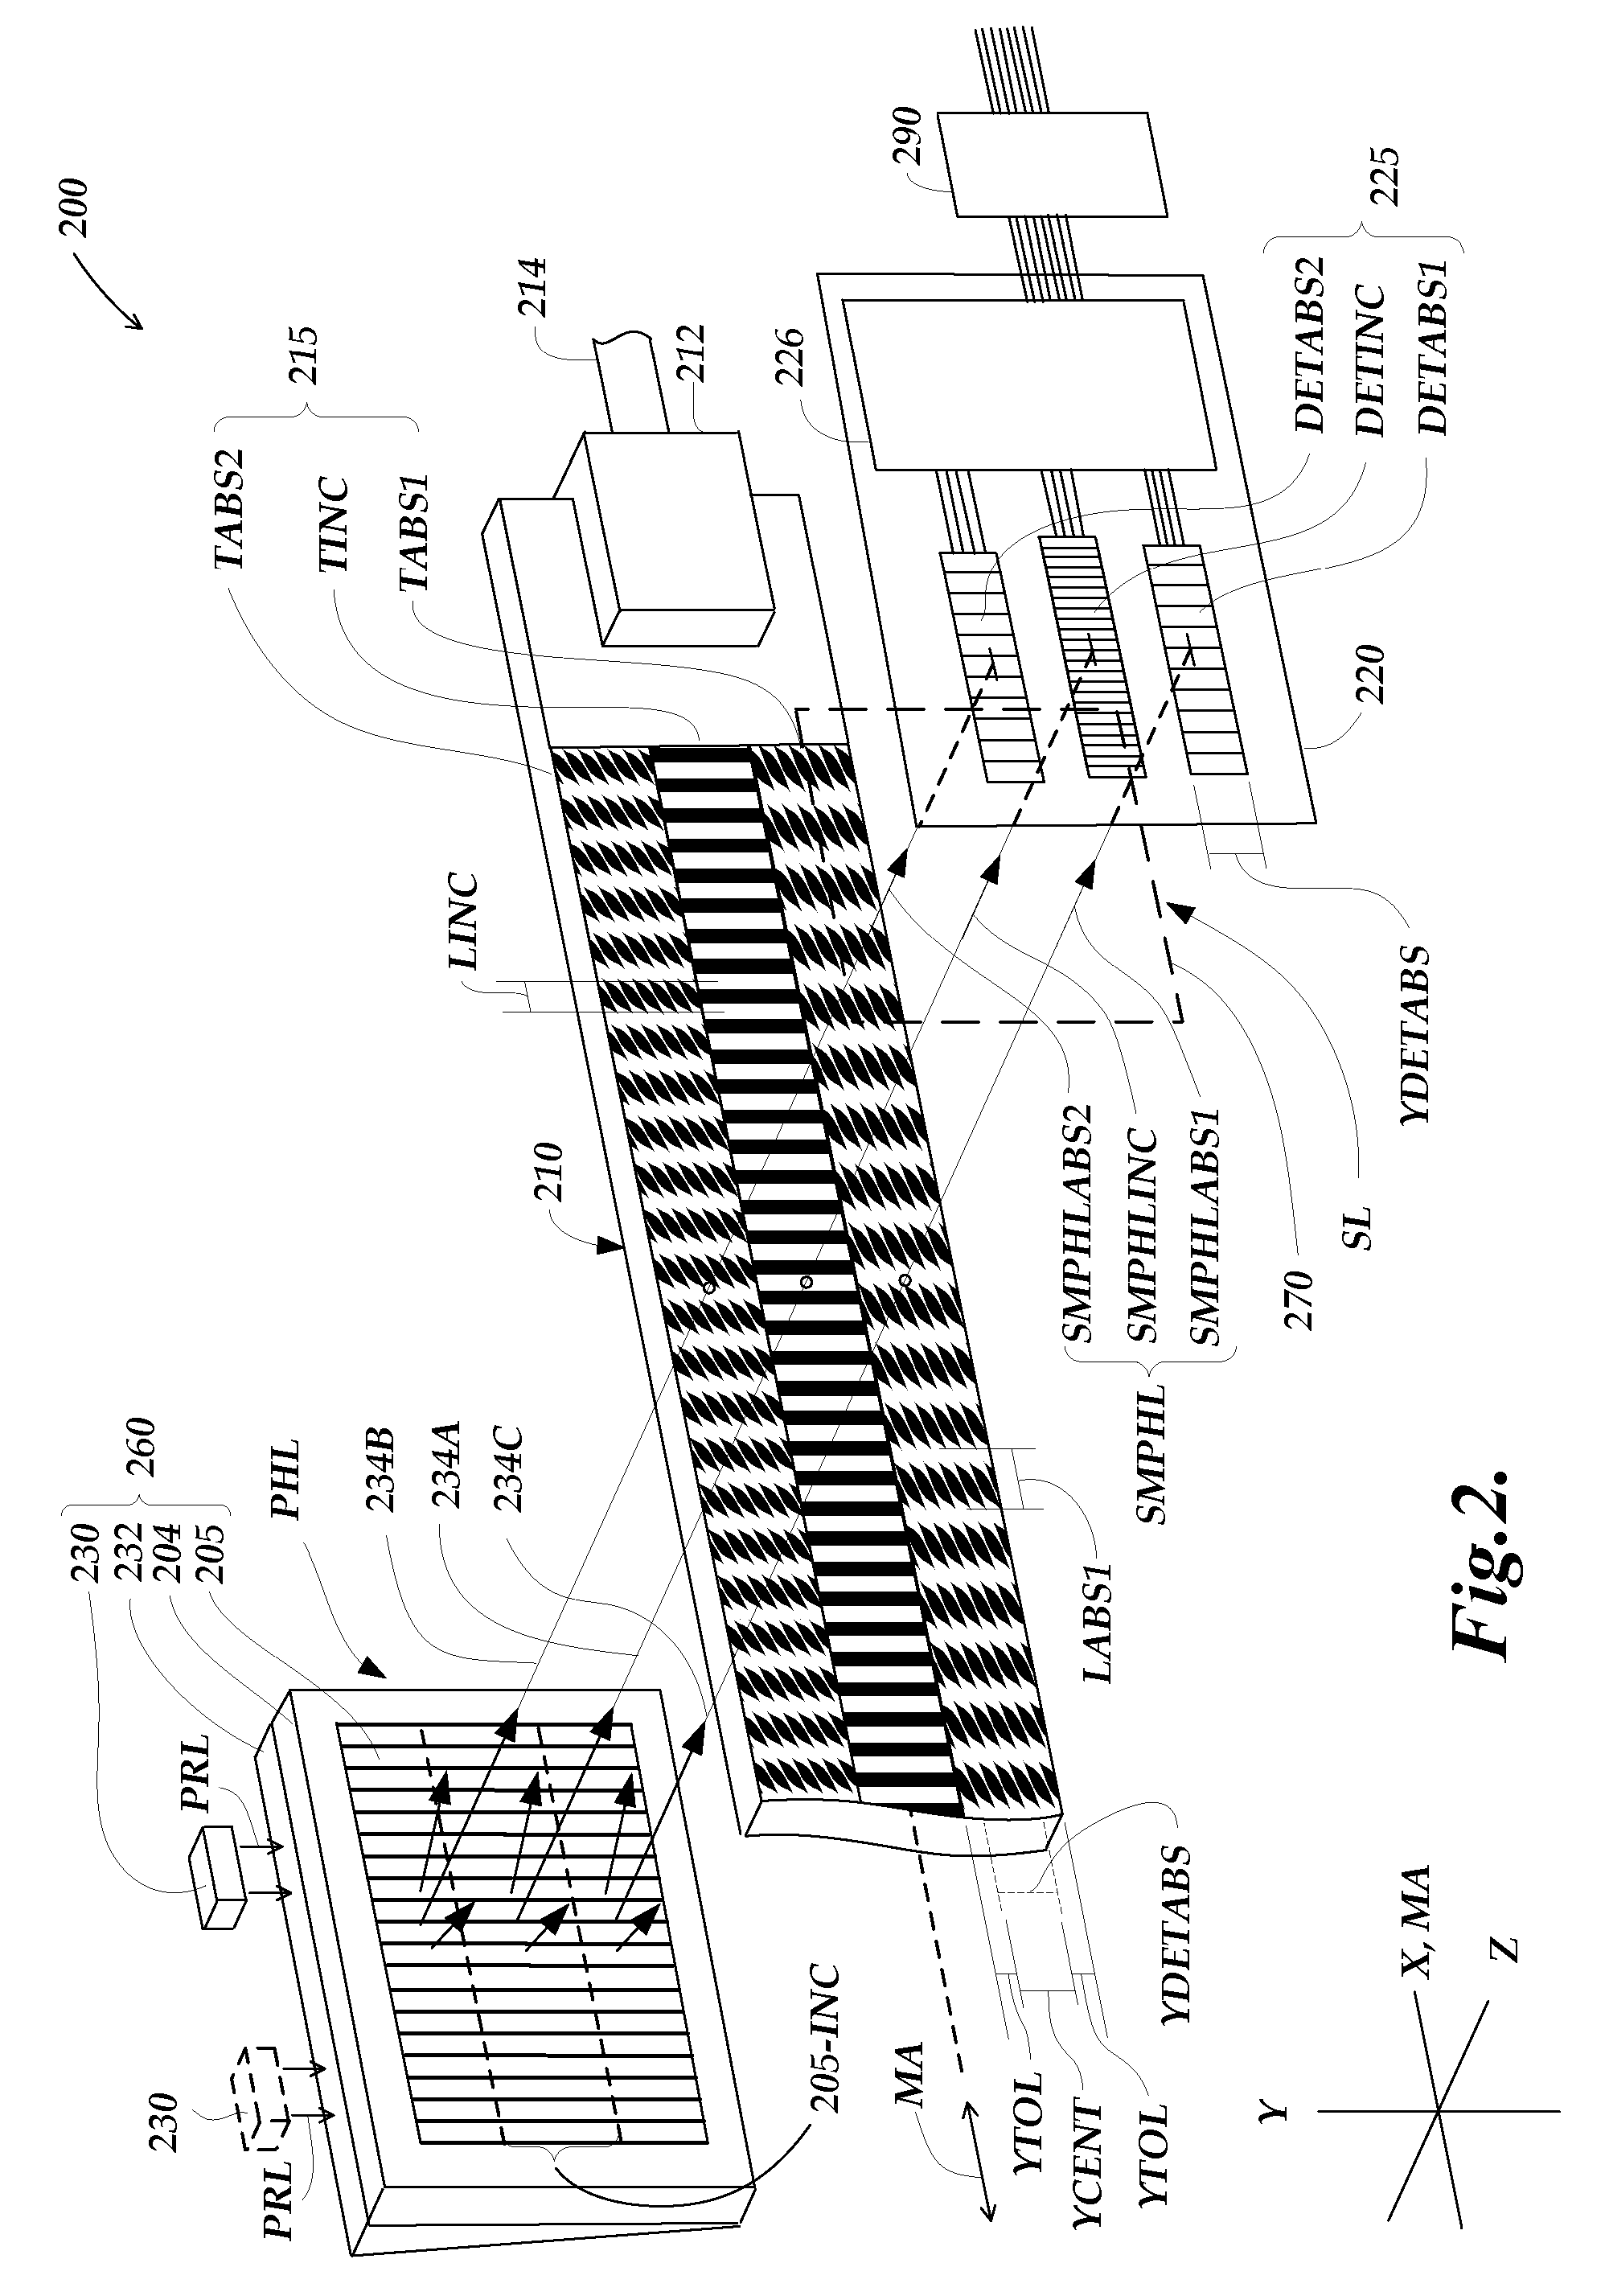 Displacement encoder including phosphor illumination source